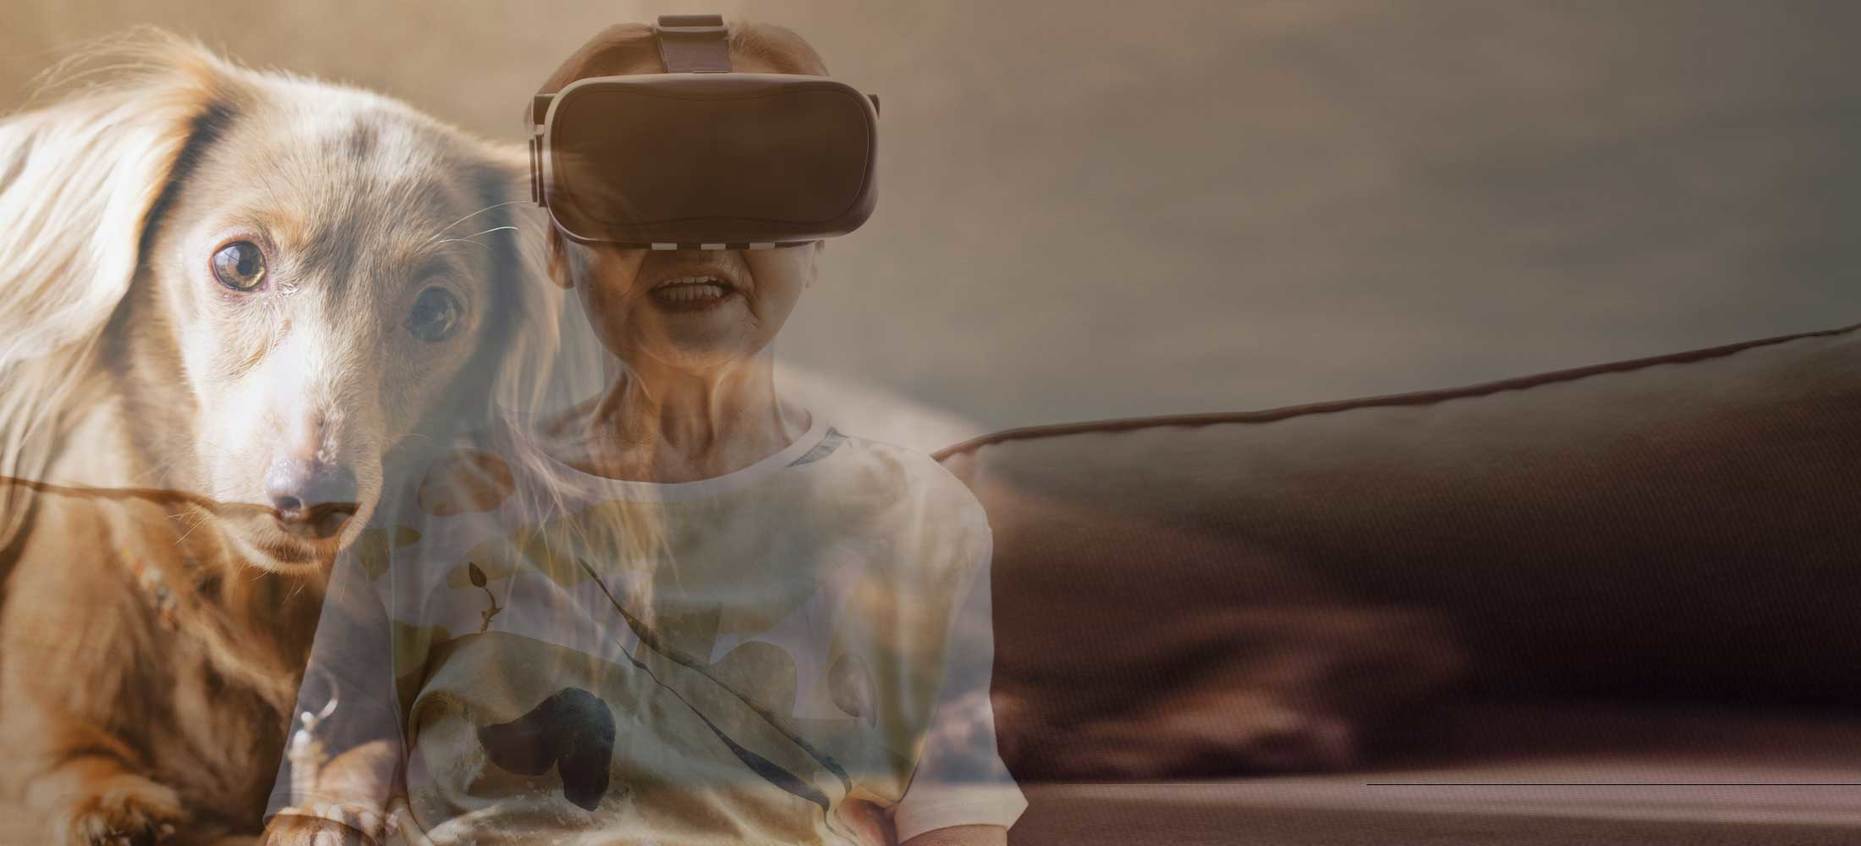 Monkey Helpers: our future - virtual reality headset